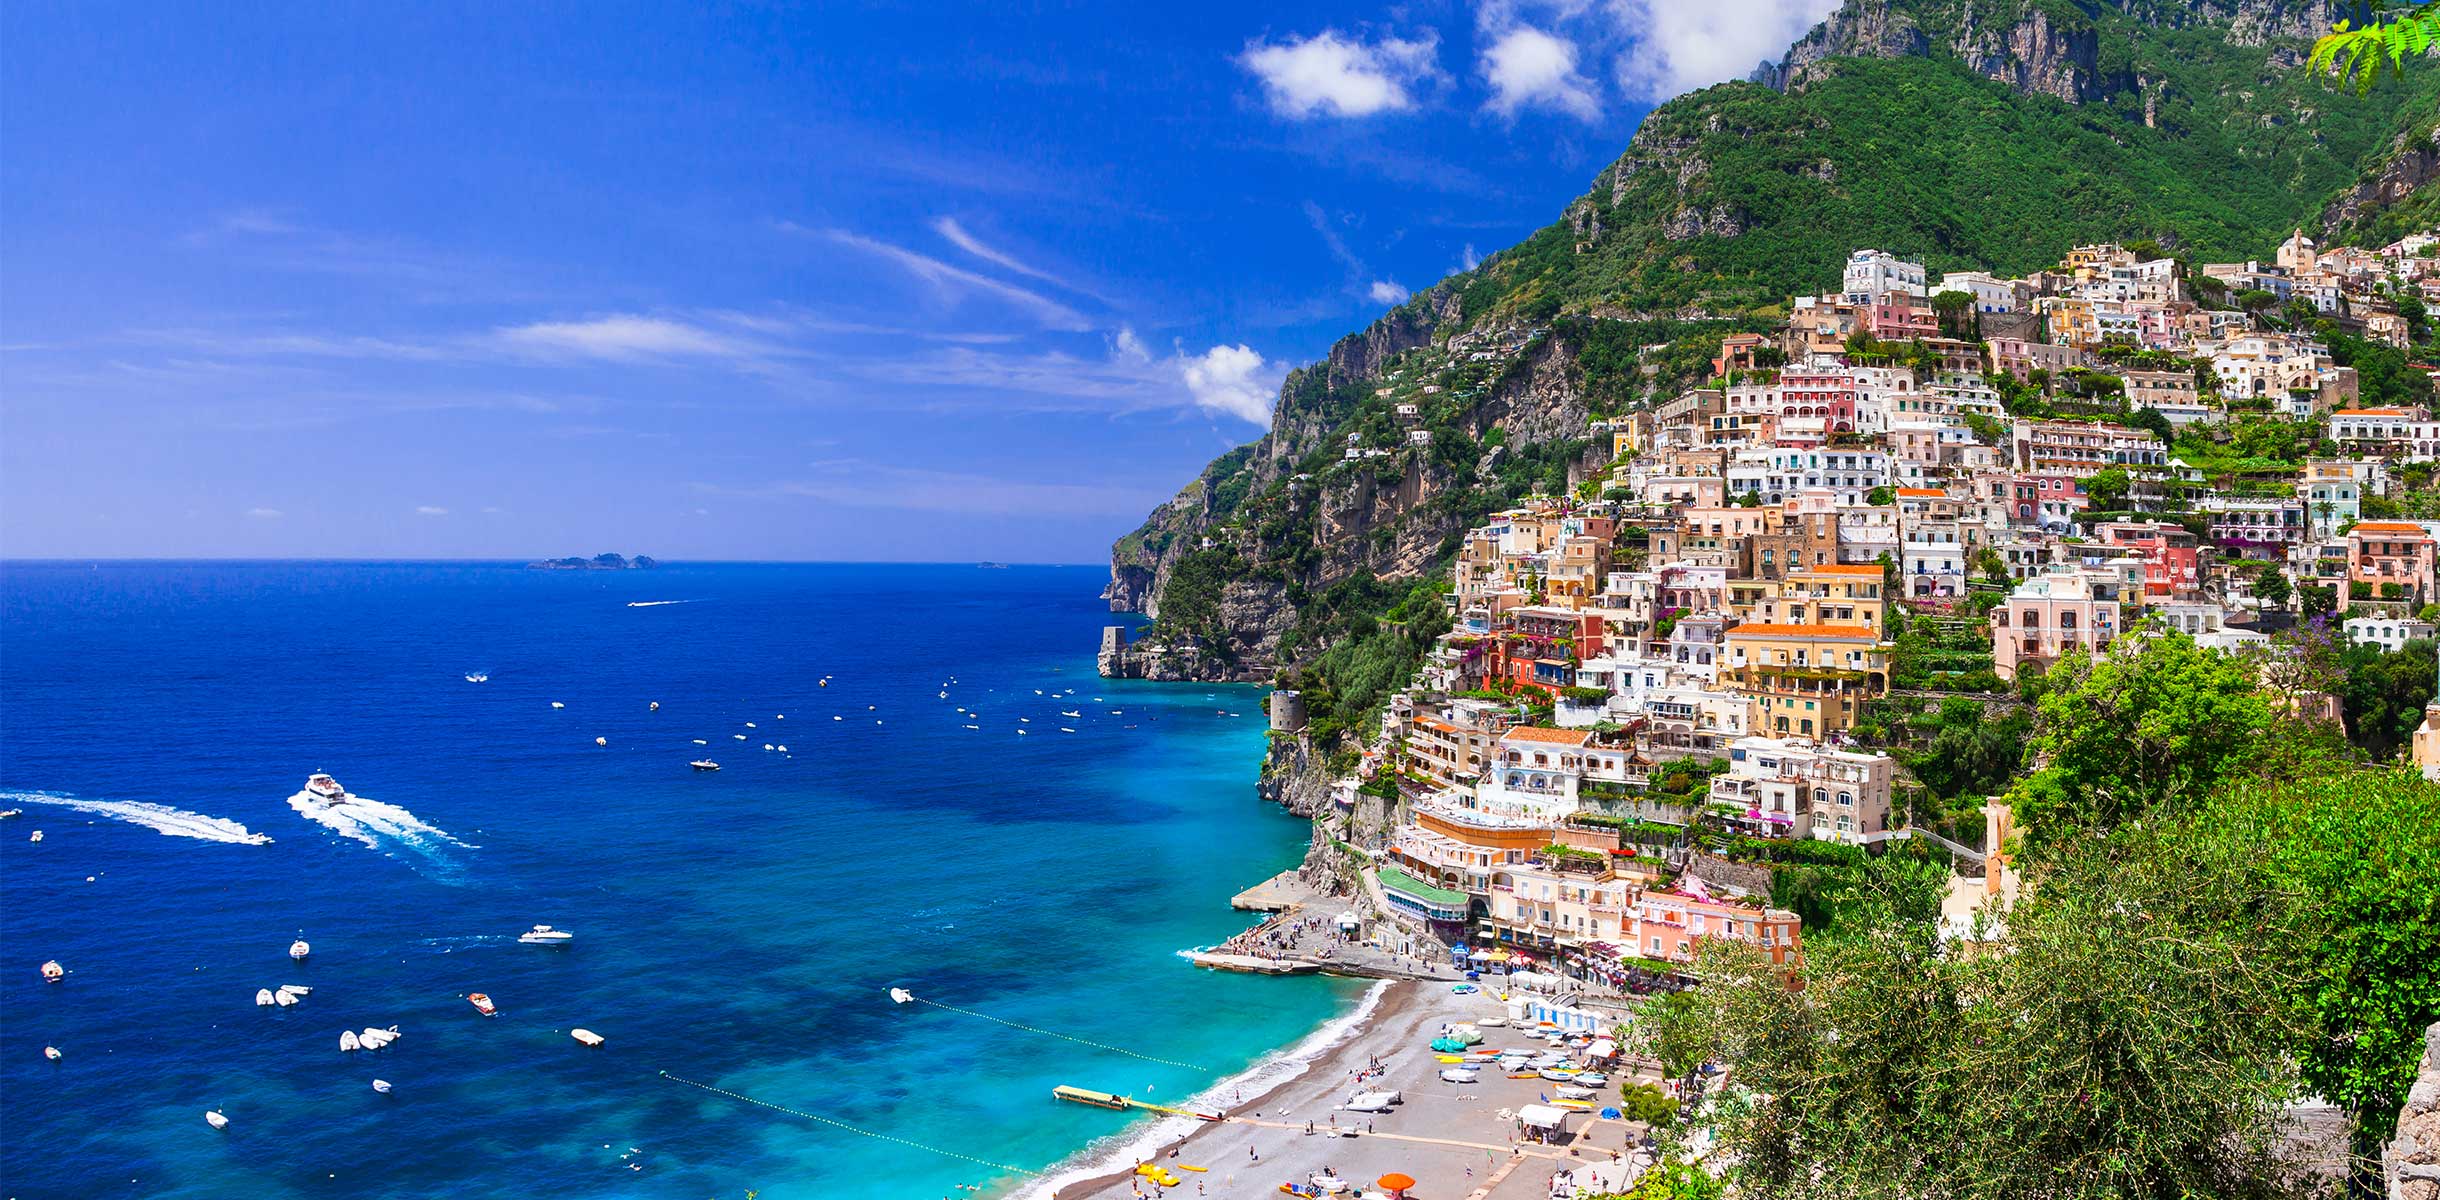 Visit the Amalfi Coast when cruising to the Mediterranean